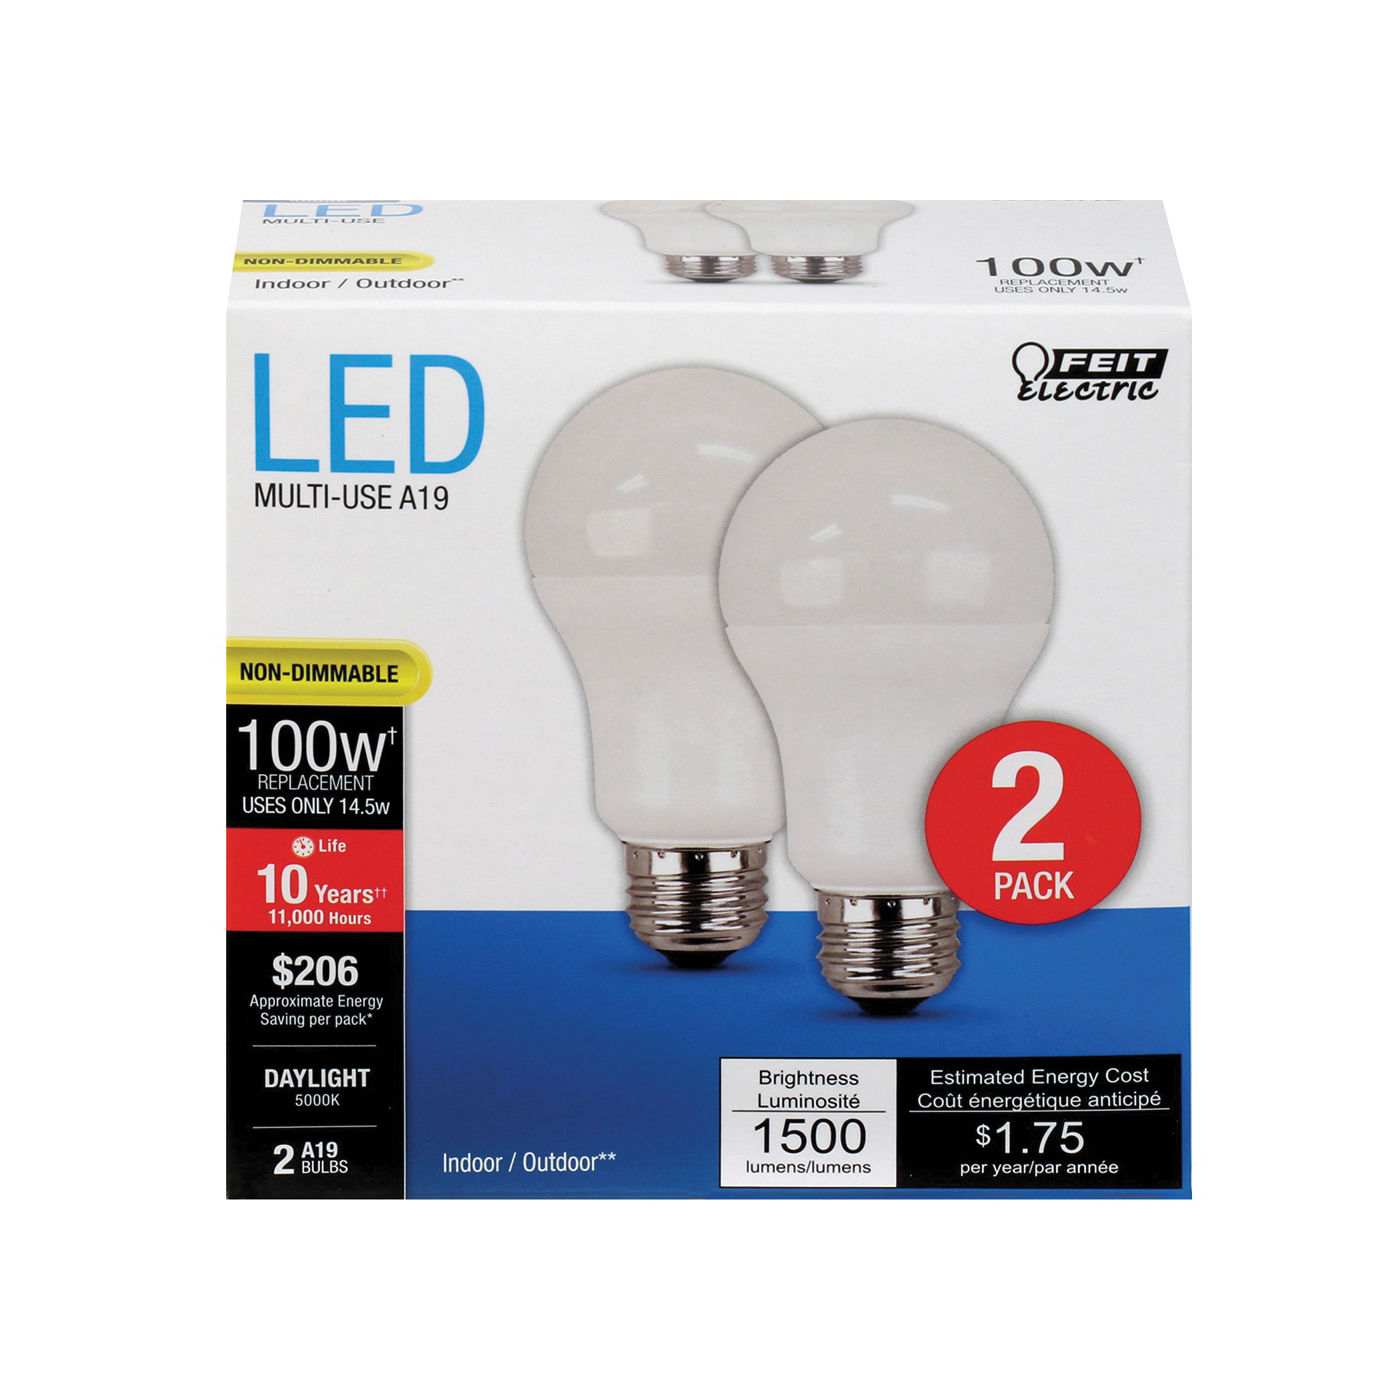 A1600/850/10KLED/2 LED Lamp, General Purpose, A19 Lamp, 100 W Equivalent, E26 Lamp Base, White